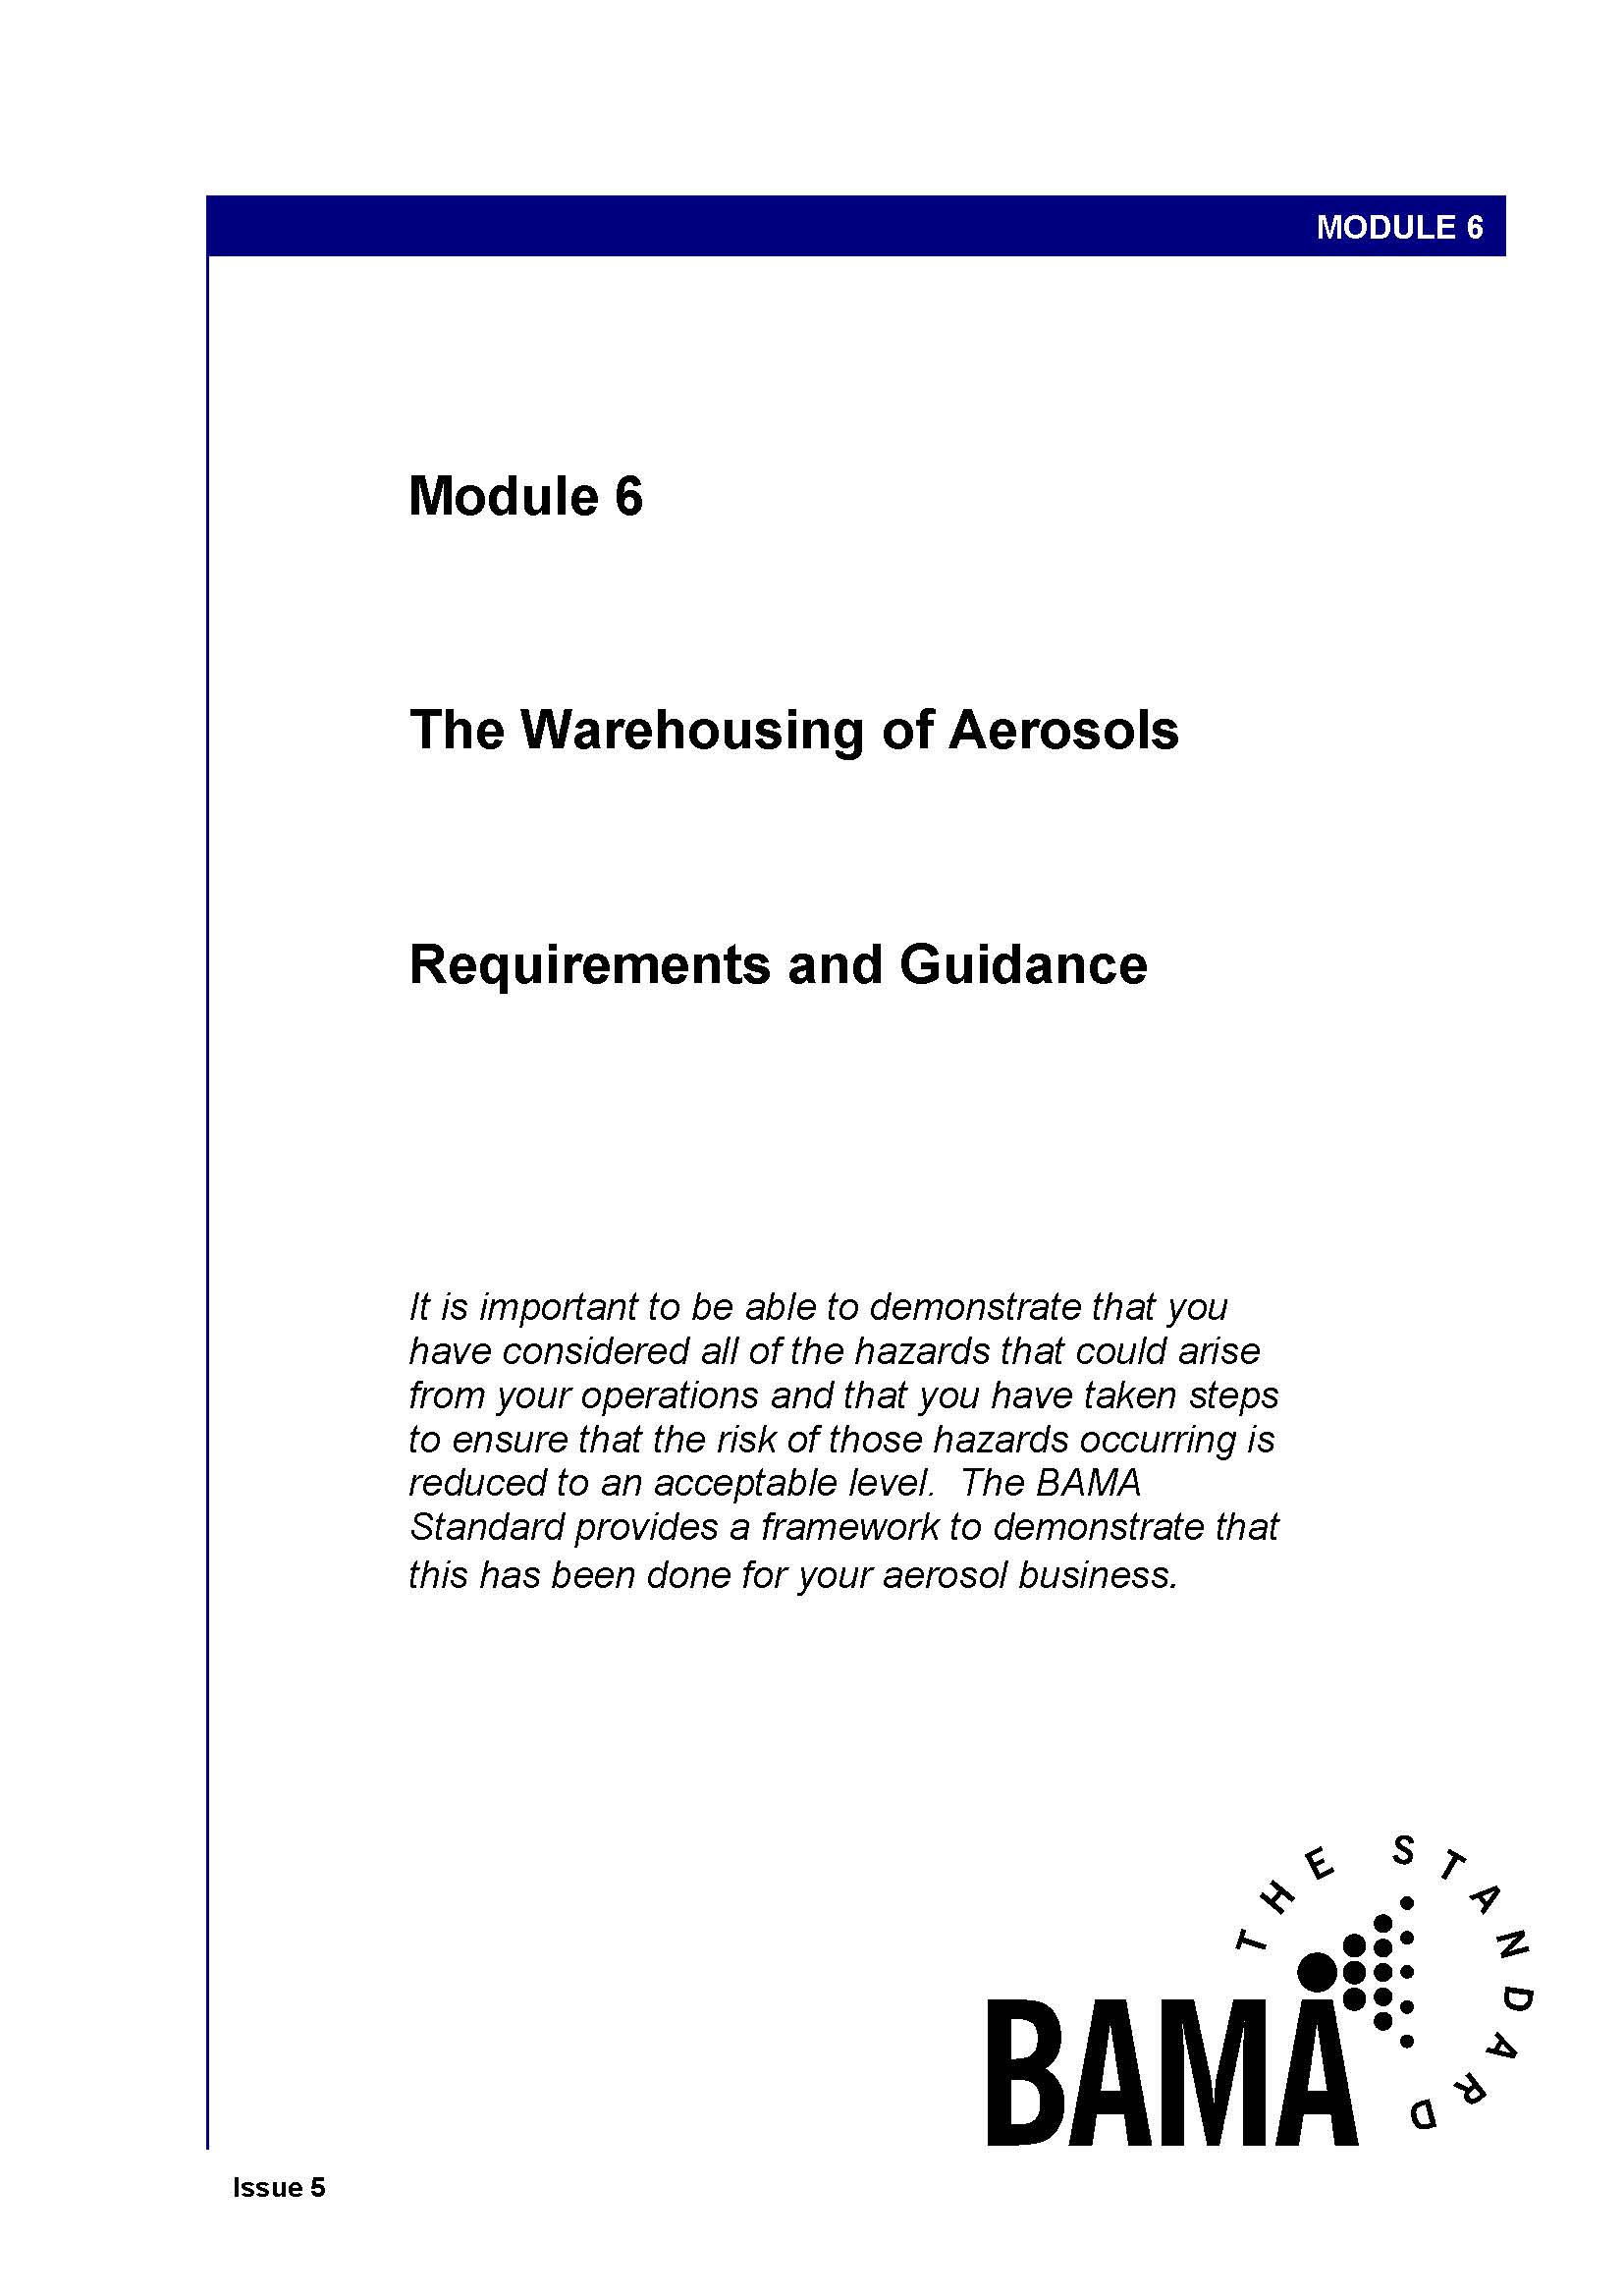 BAMA Standard Module 6 - The Warehousing of Aerosols